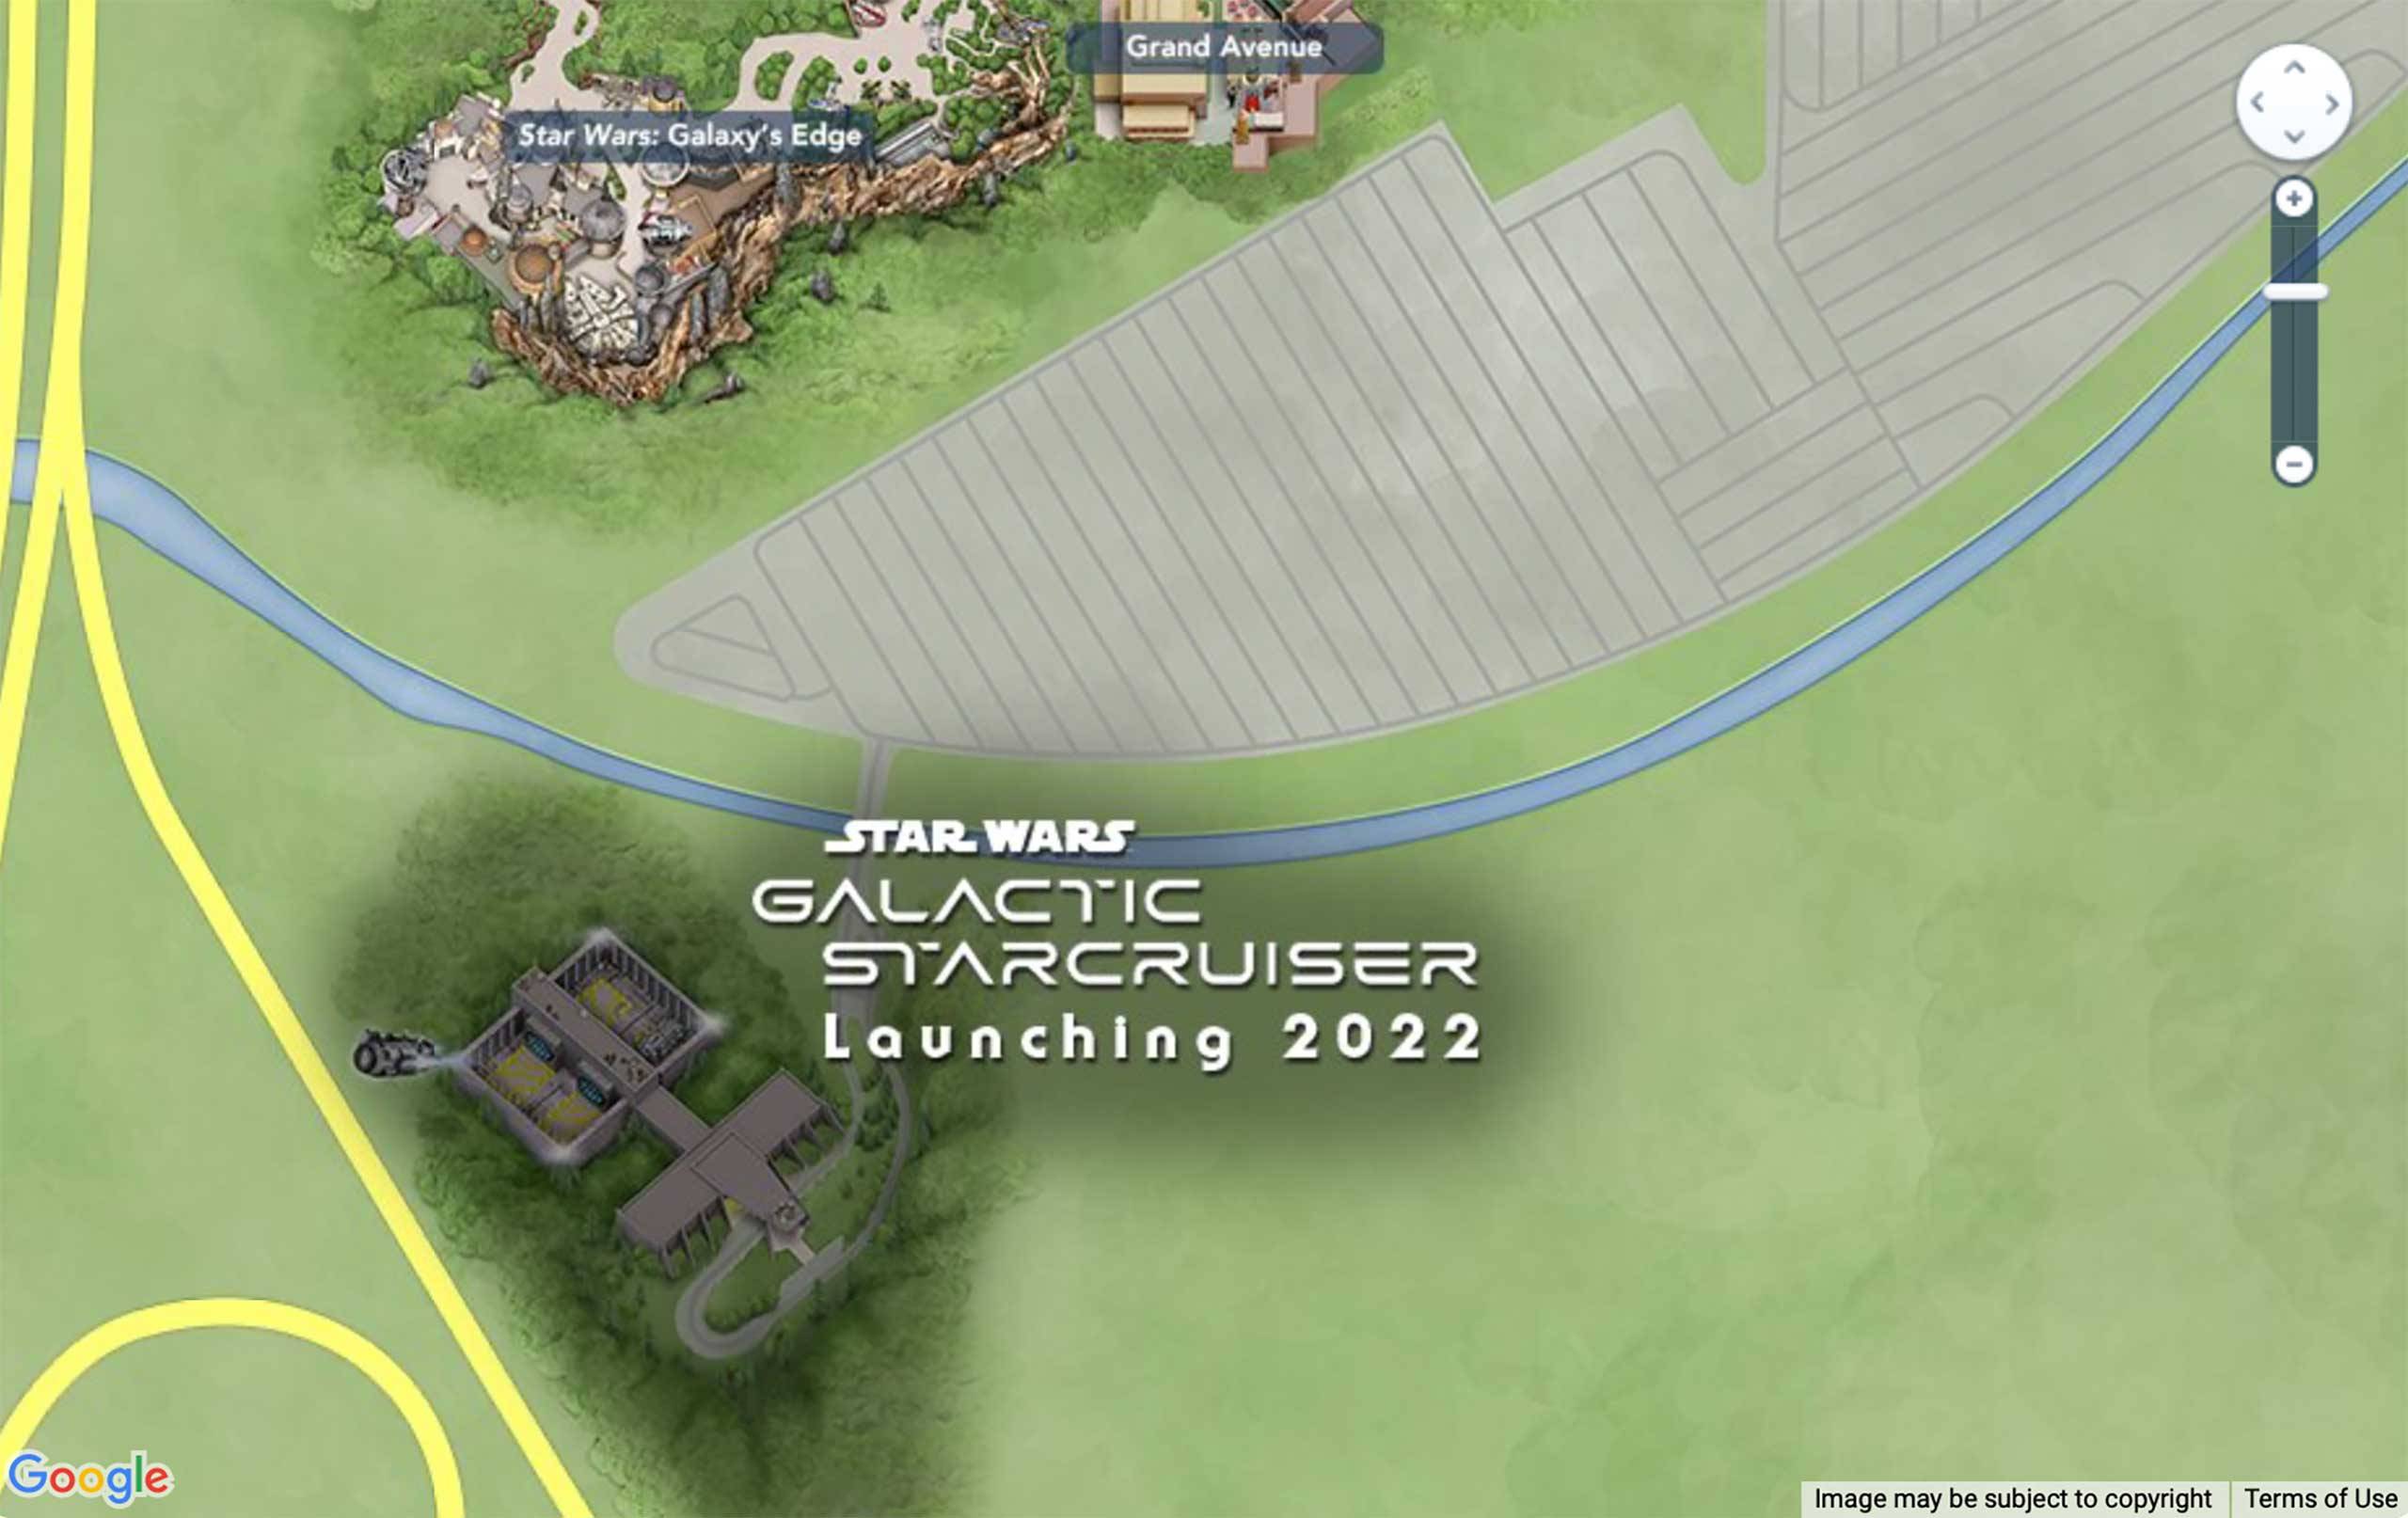 Star Wars Galactic Starcruiser now on Disney World digital guide maps